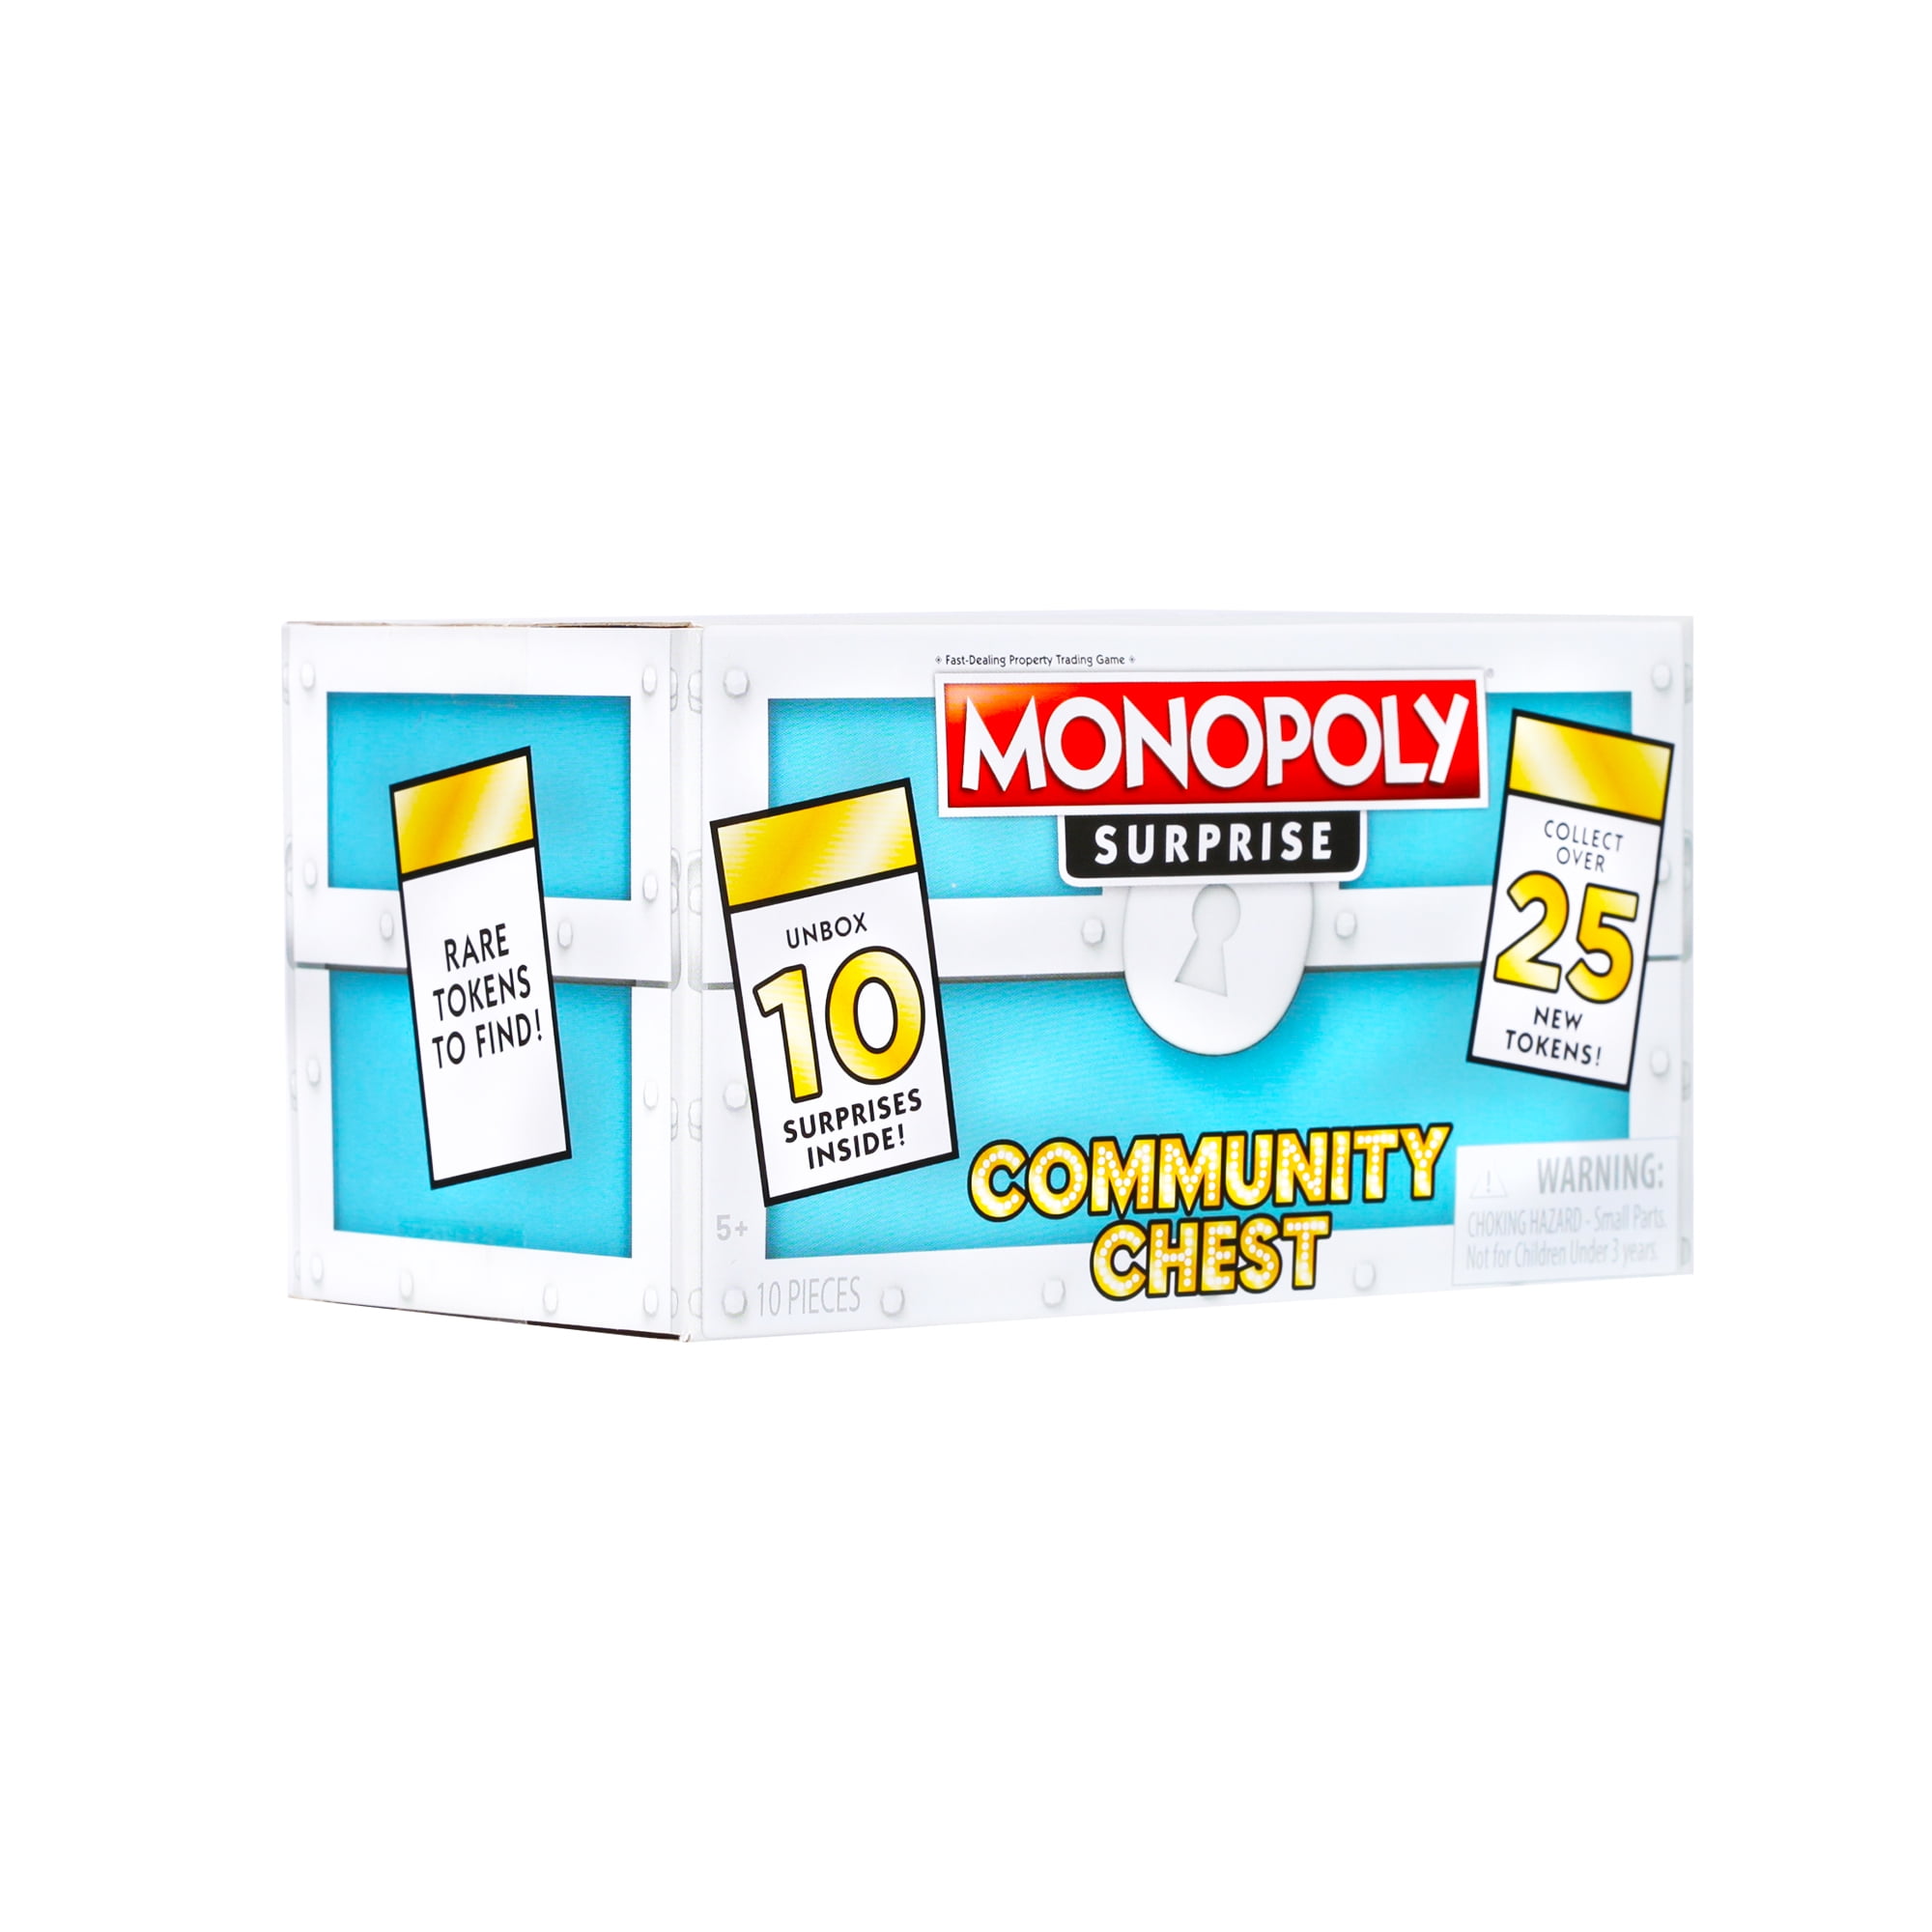 New Mint Monopoly Surprise Community Chest Tokens Series 1 Game Pieces U Pick 